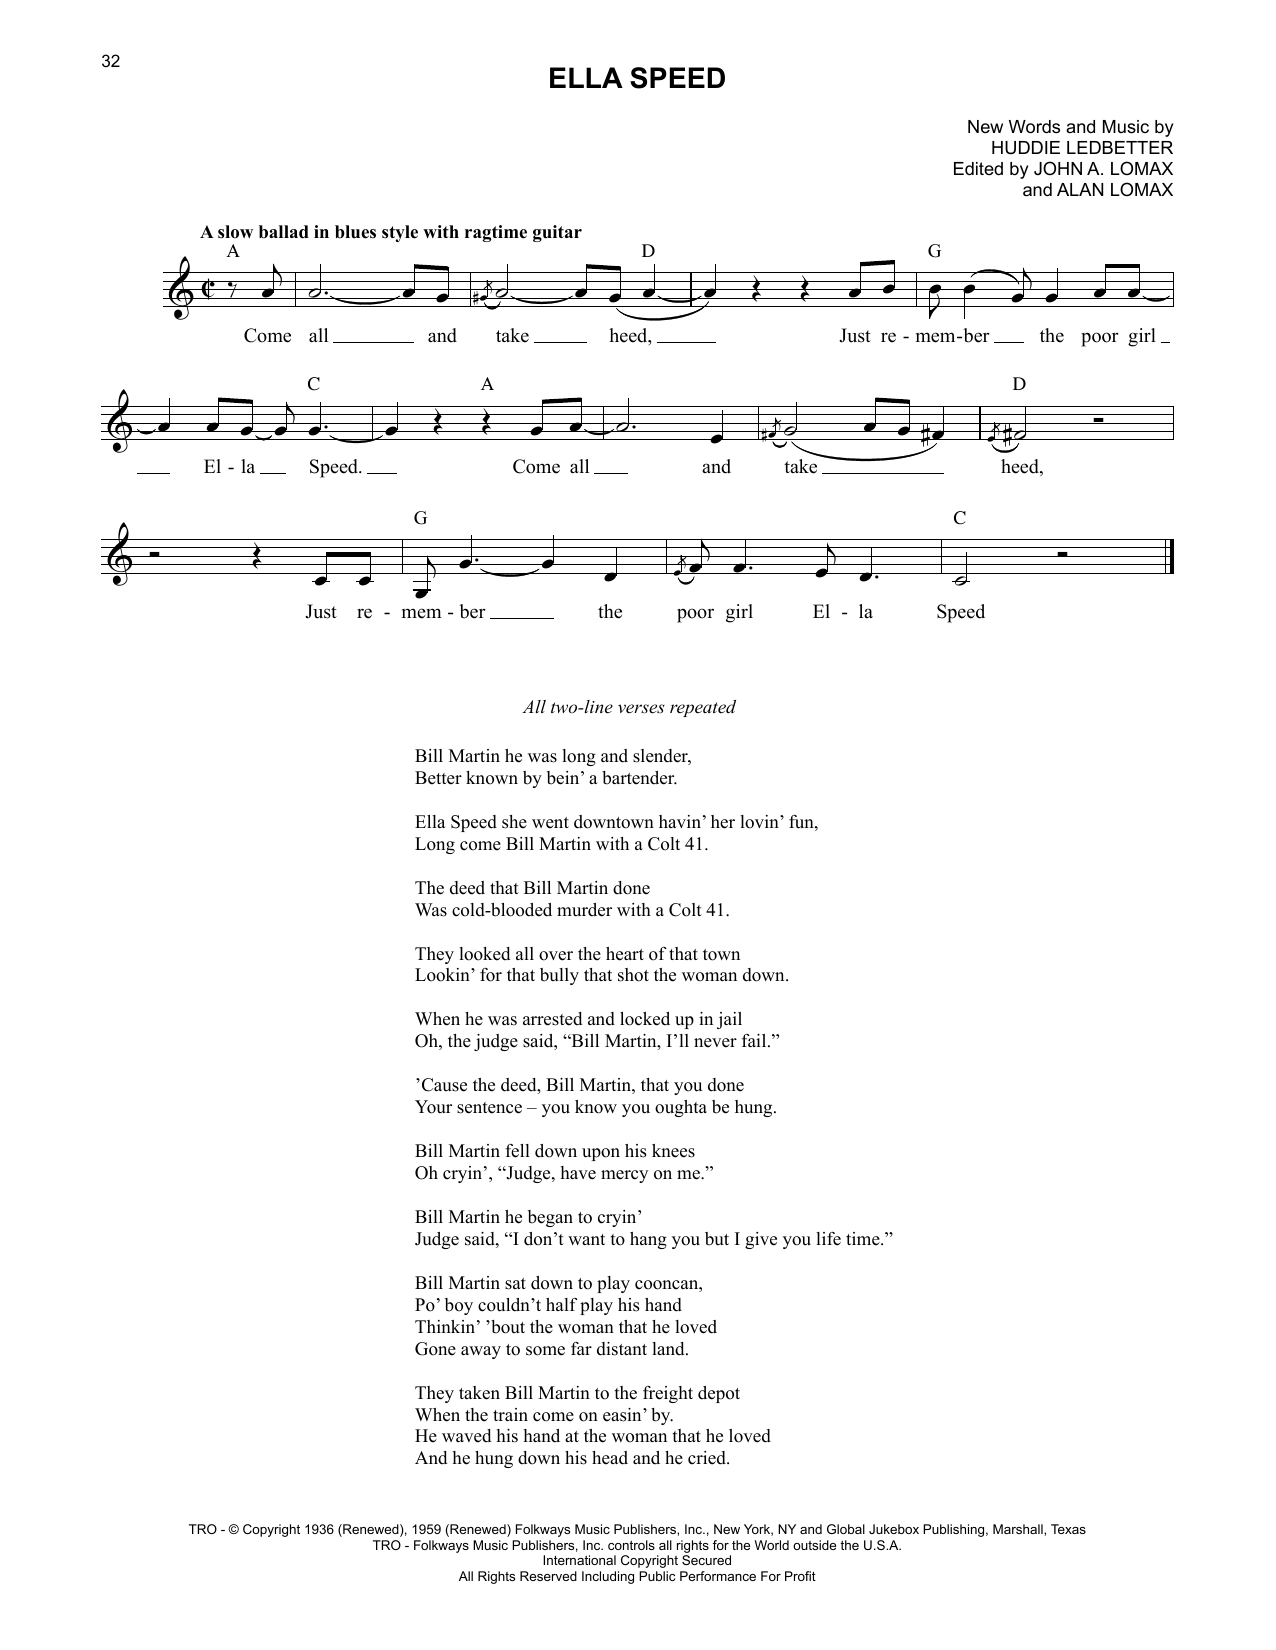 Lead Belly Ella Speed sheet music notes printable PDF score